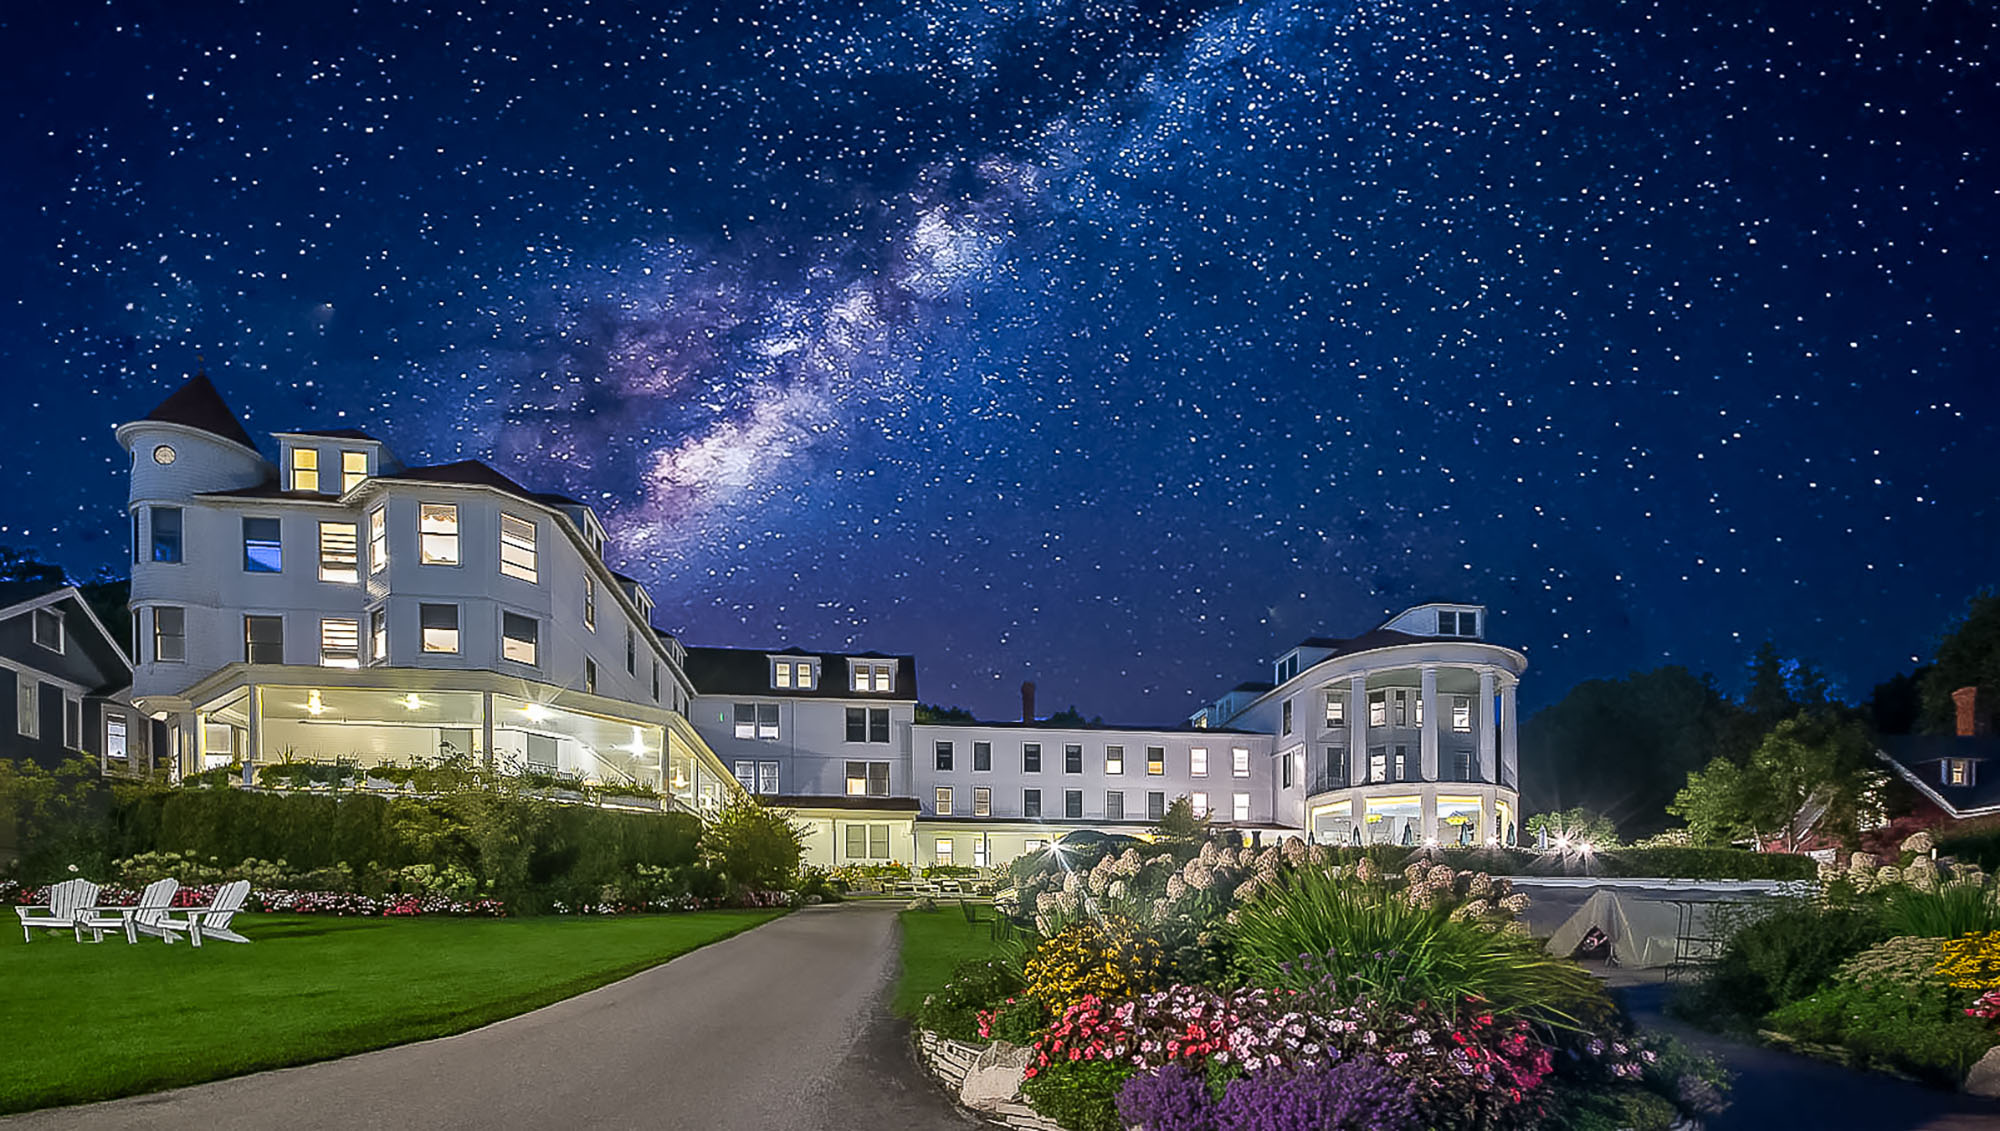 Milkyway Starry Night Sky above Island House Hotel on Mackinac Island, Michigan